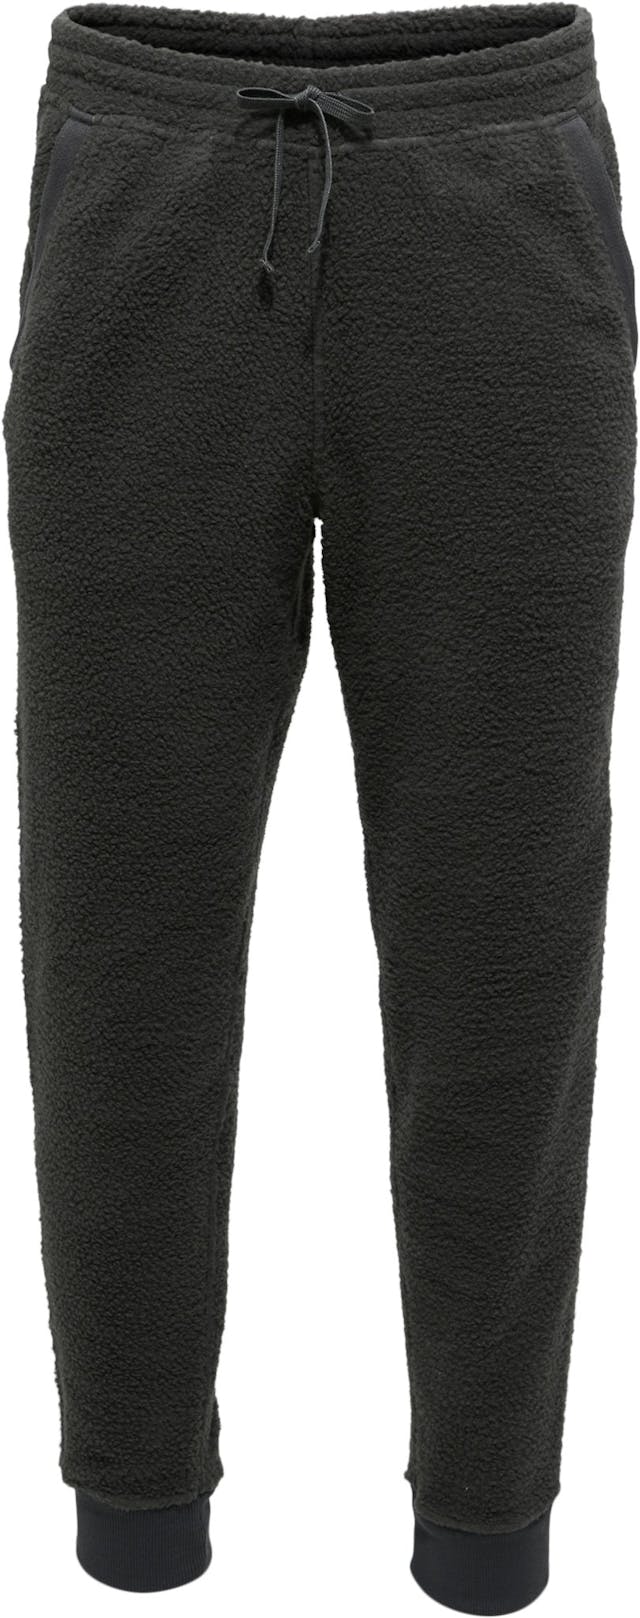 Product image for Shearling Fleece Pants - Men's